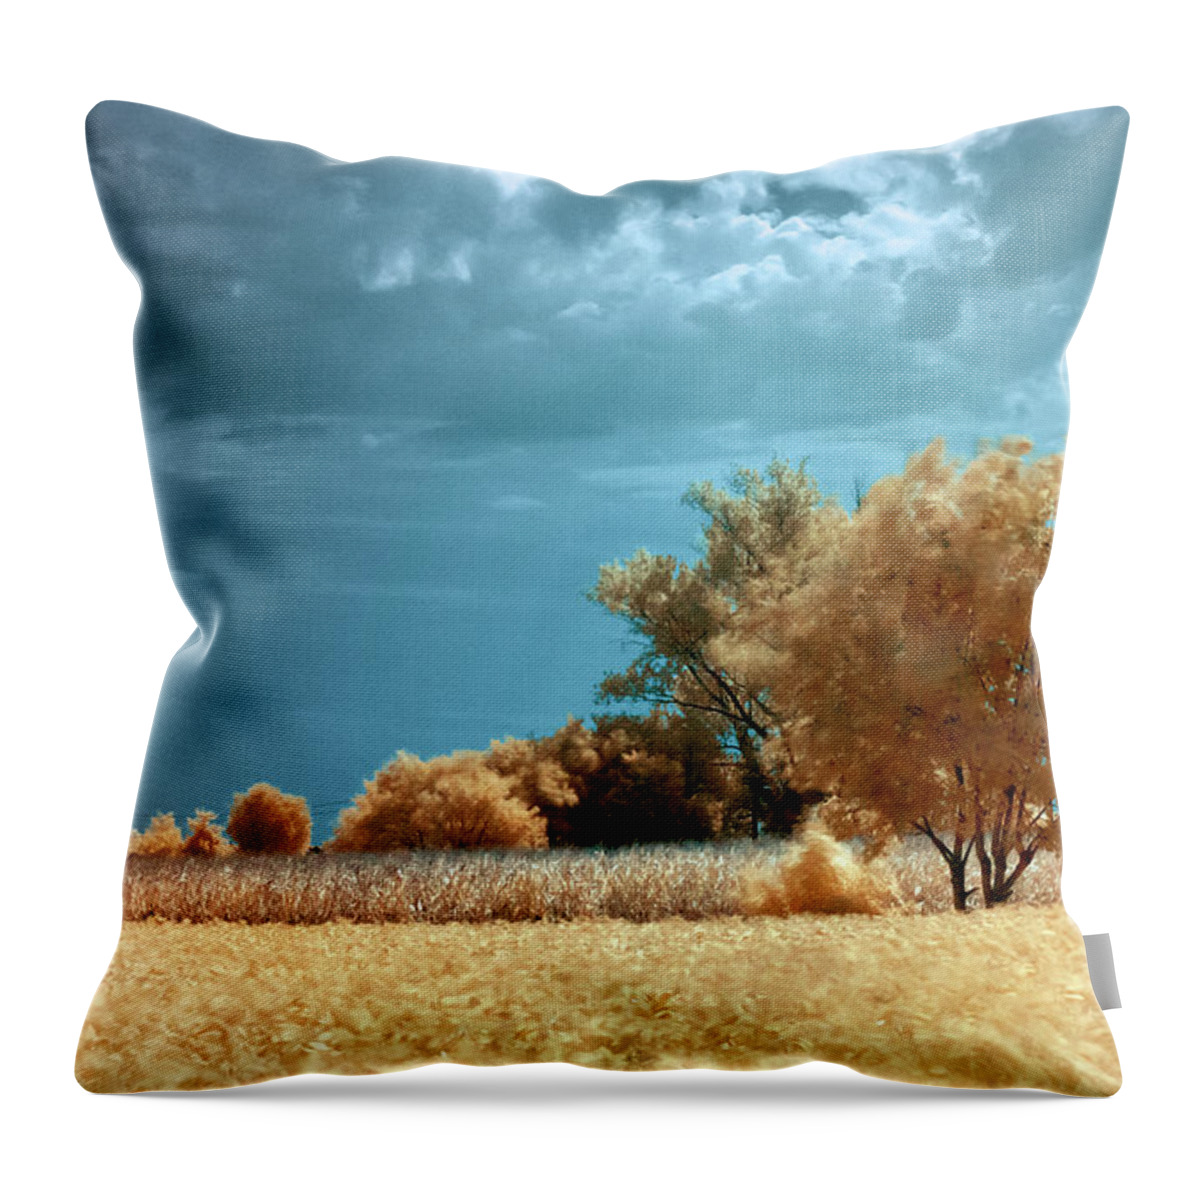 Landscape Throw Pillow featuring the photograph Golden summerscape by Helga Novelli